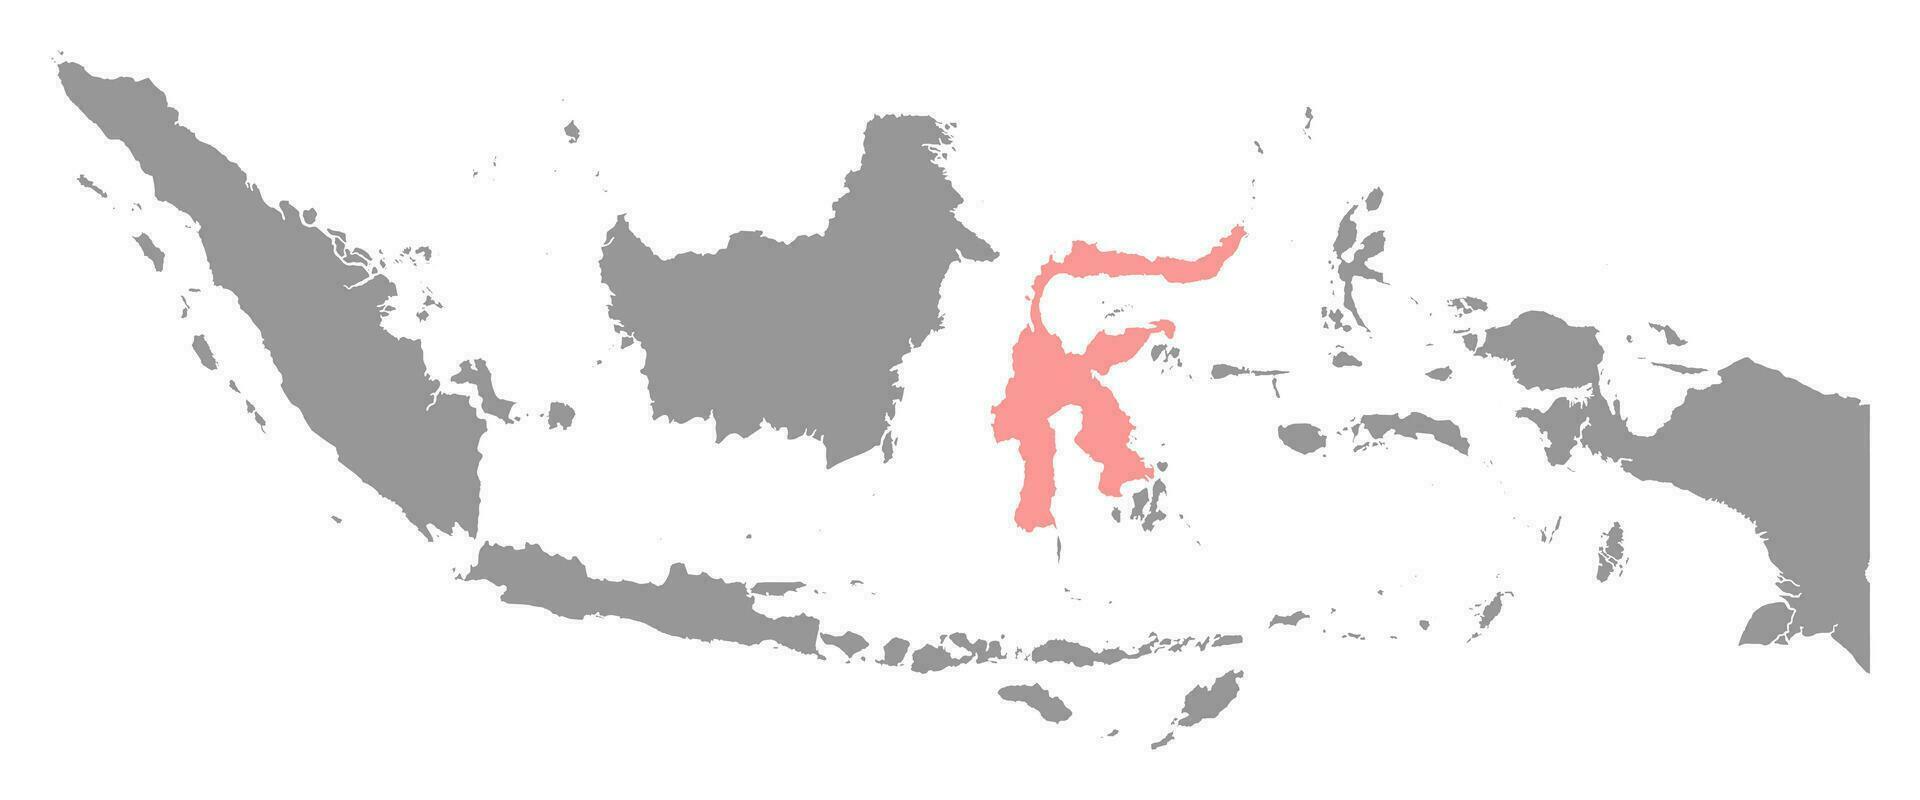 Sulawesi island map, region of Indonesia. Vector illustration.